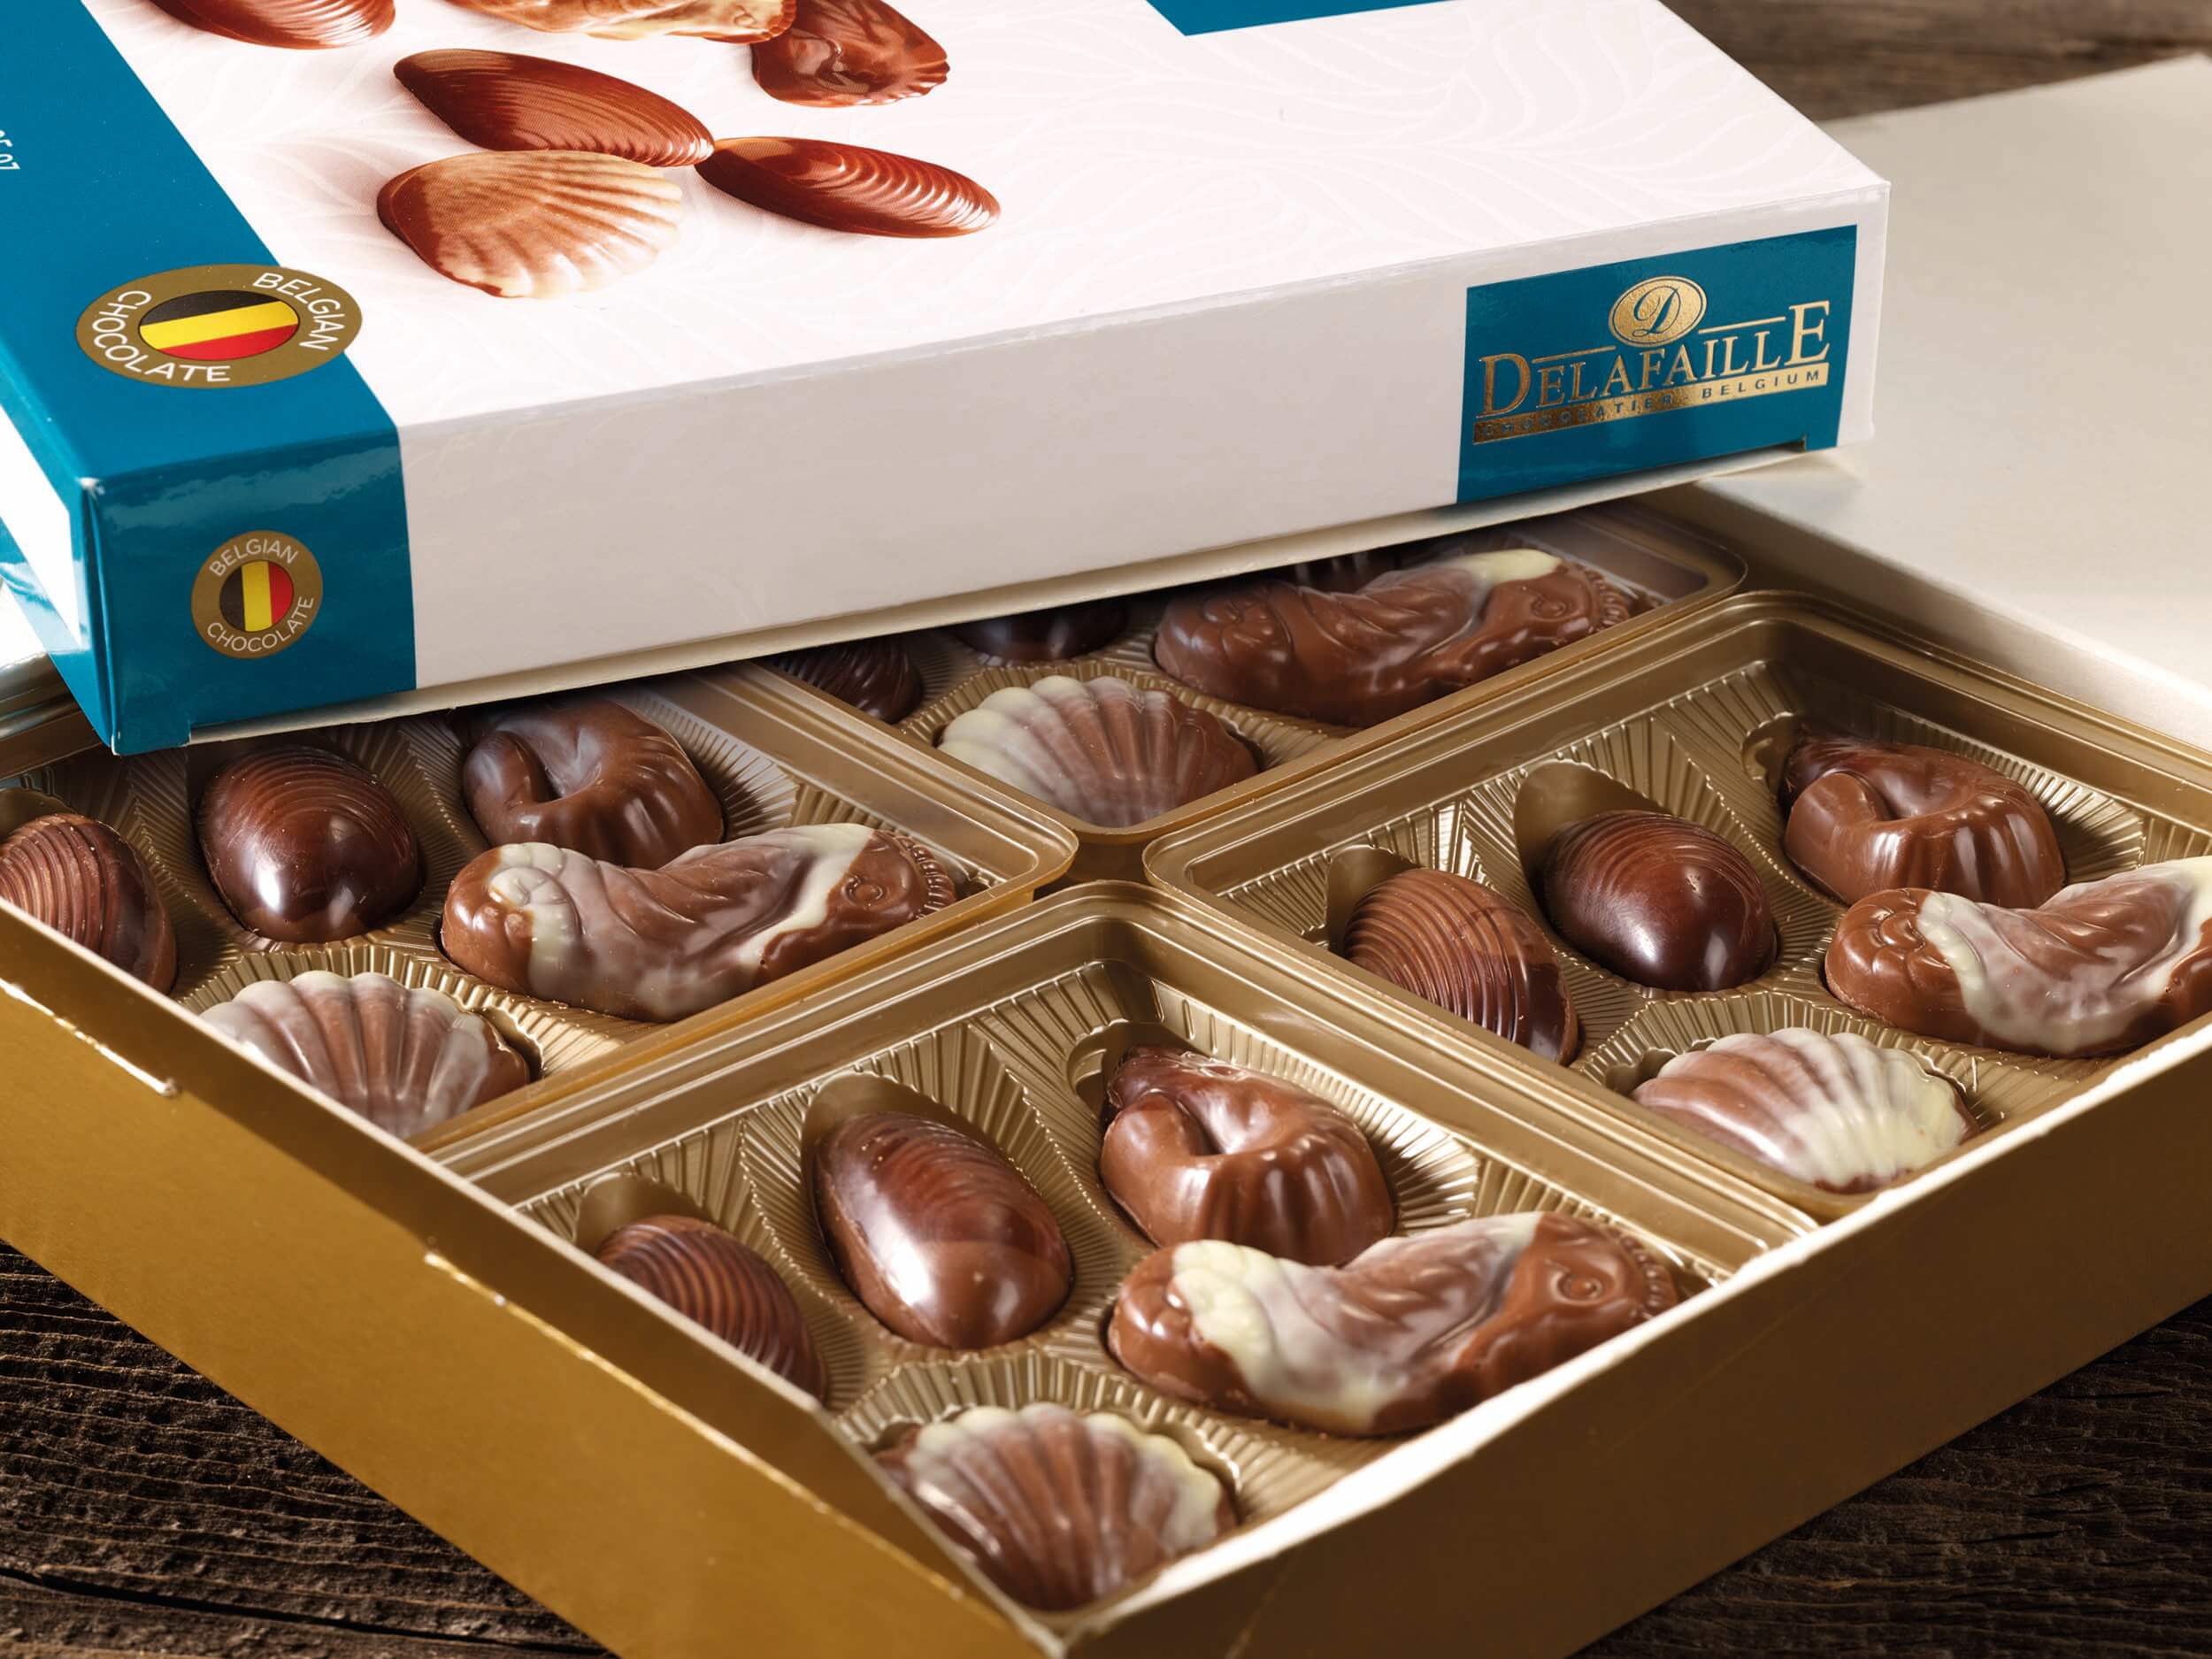 delafaille chocolate seashells